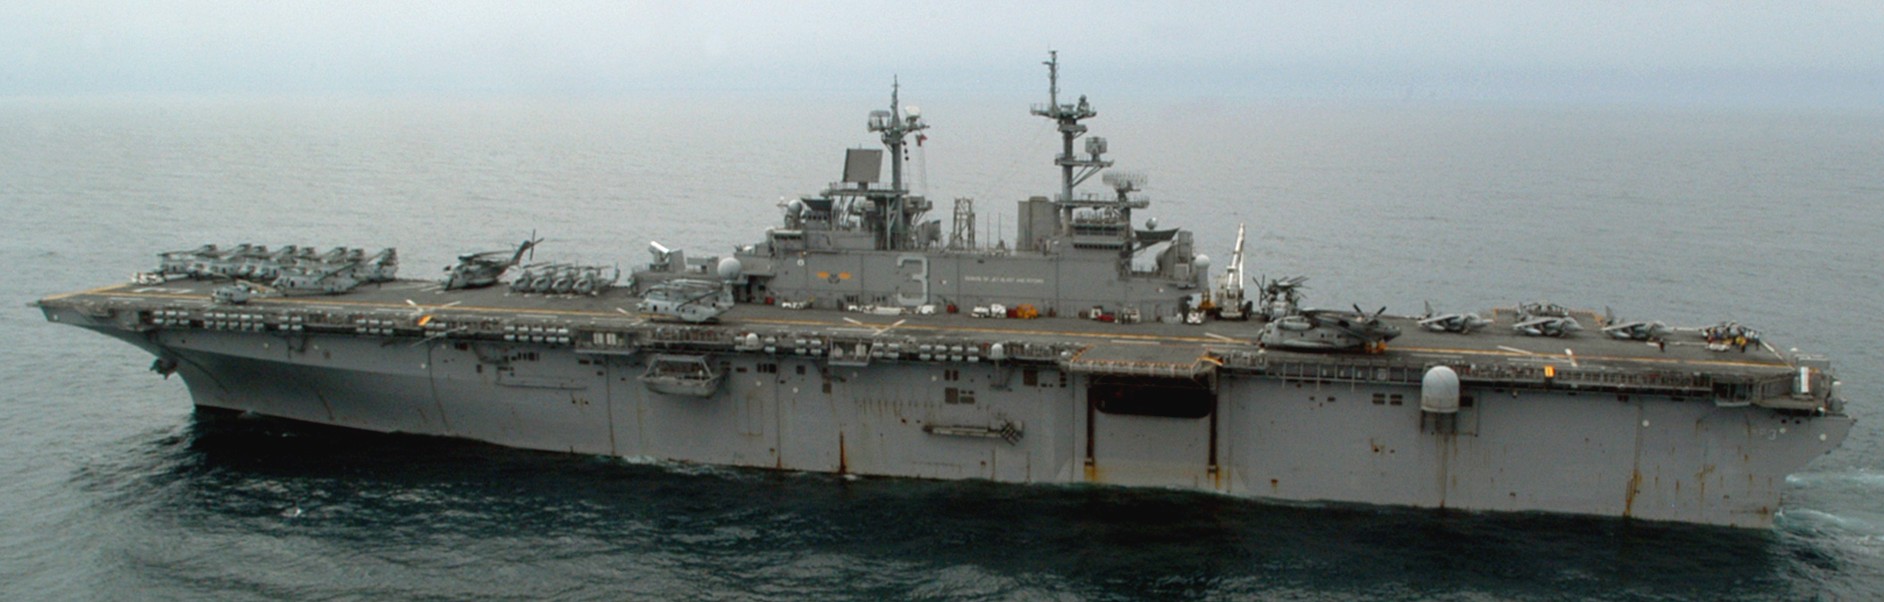 lhd-3 uss kearsarge wasp class amphibious assault ship us navy marines hmm-261 60